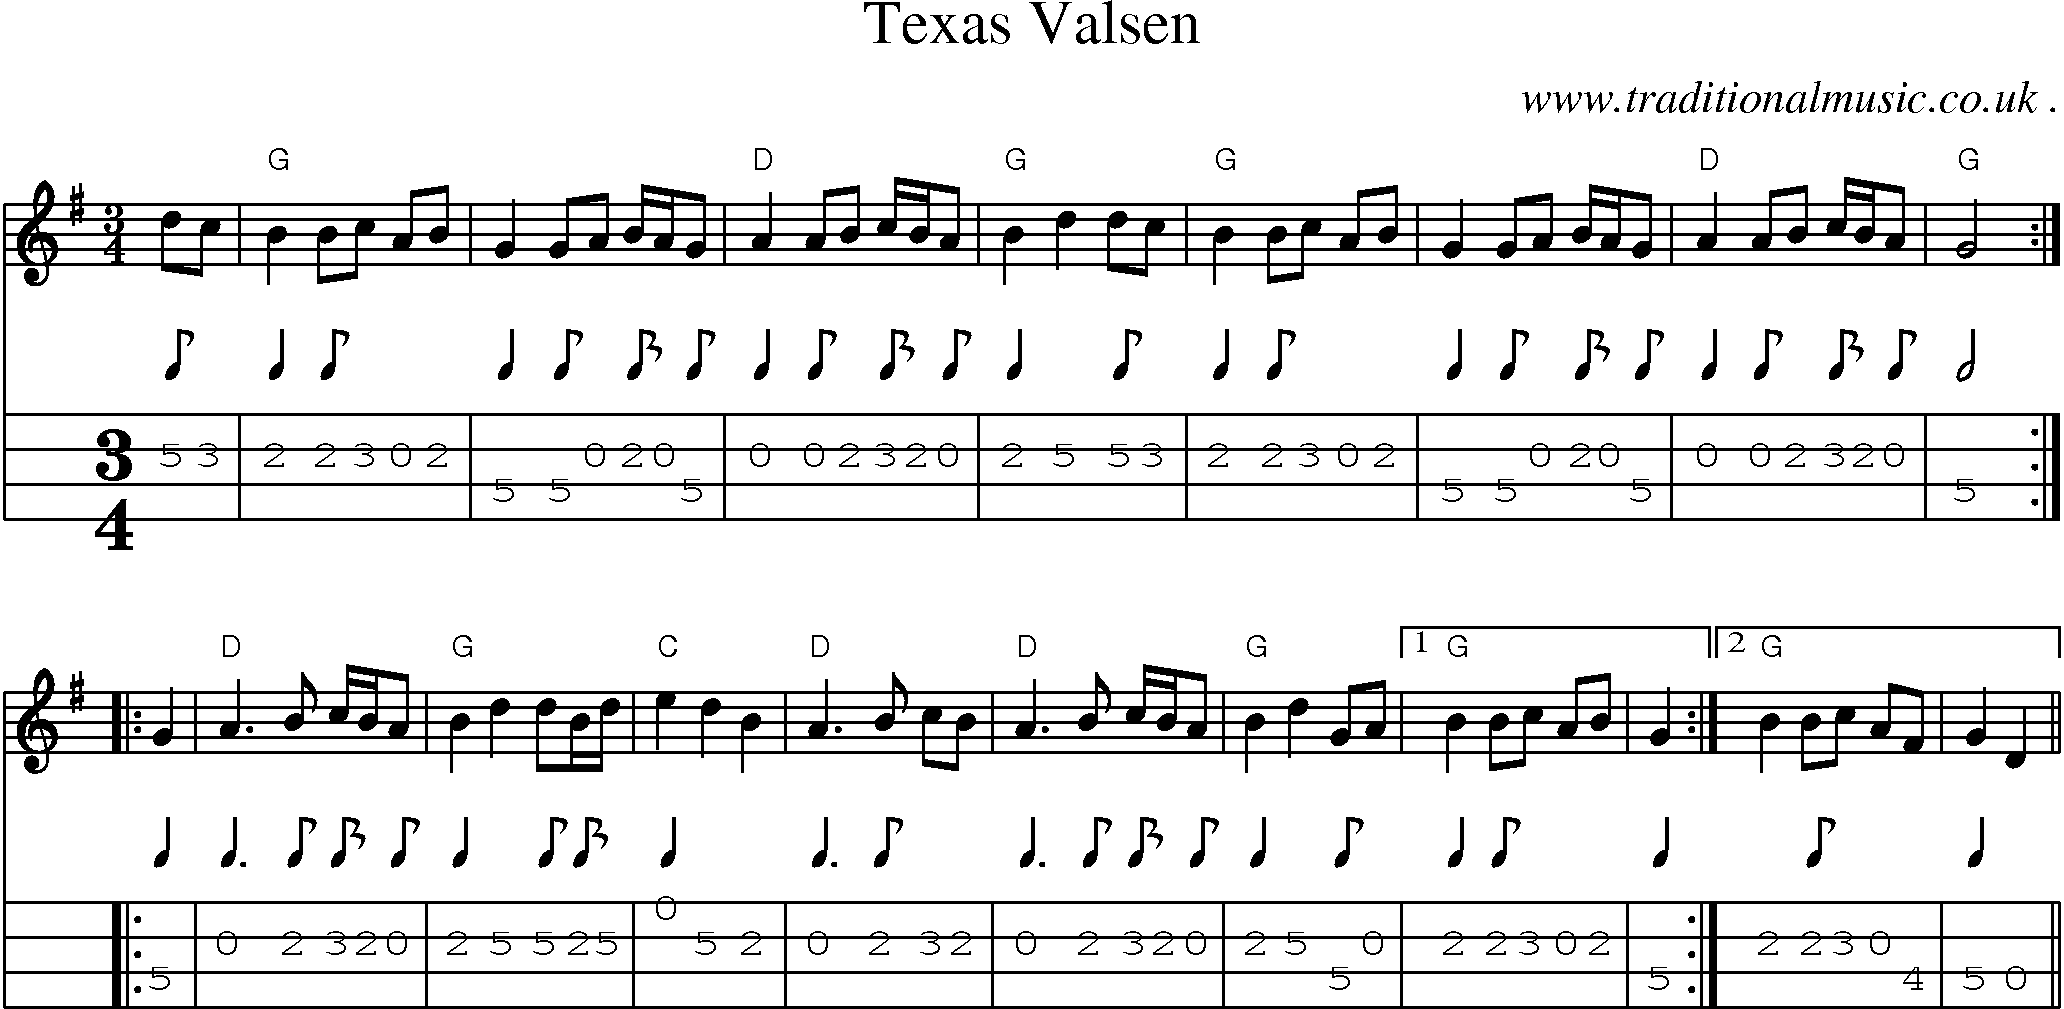 Music Score and Mandolin Tabs for Texas Valsen